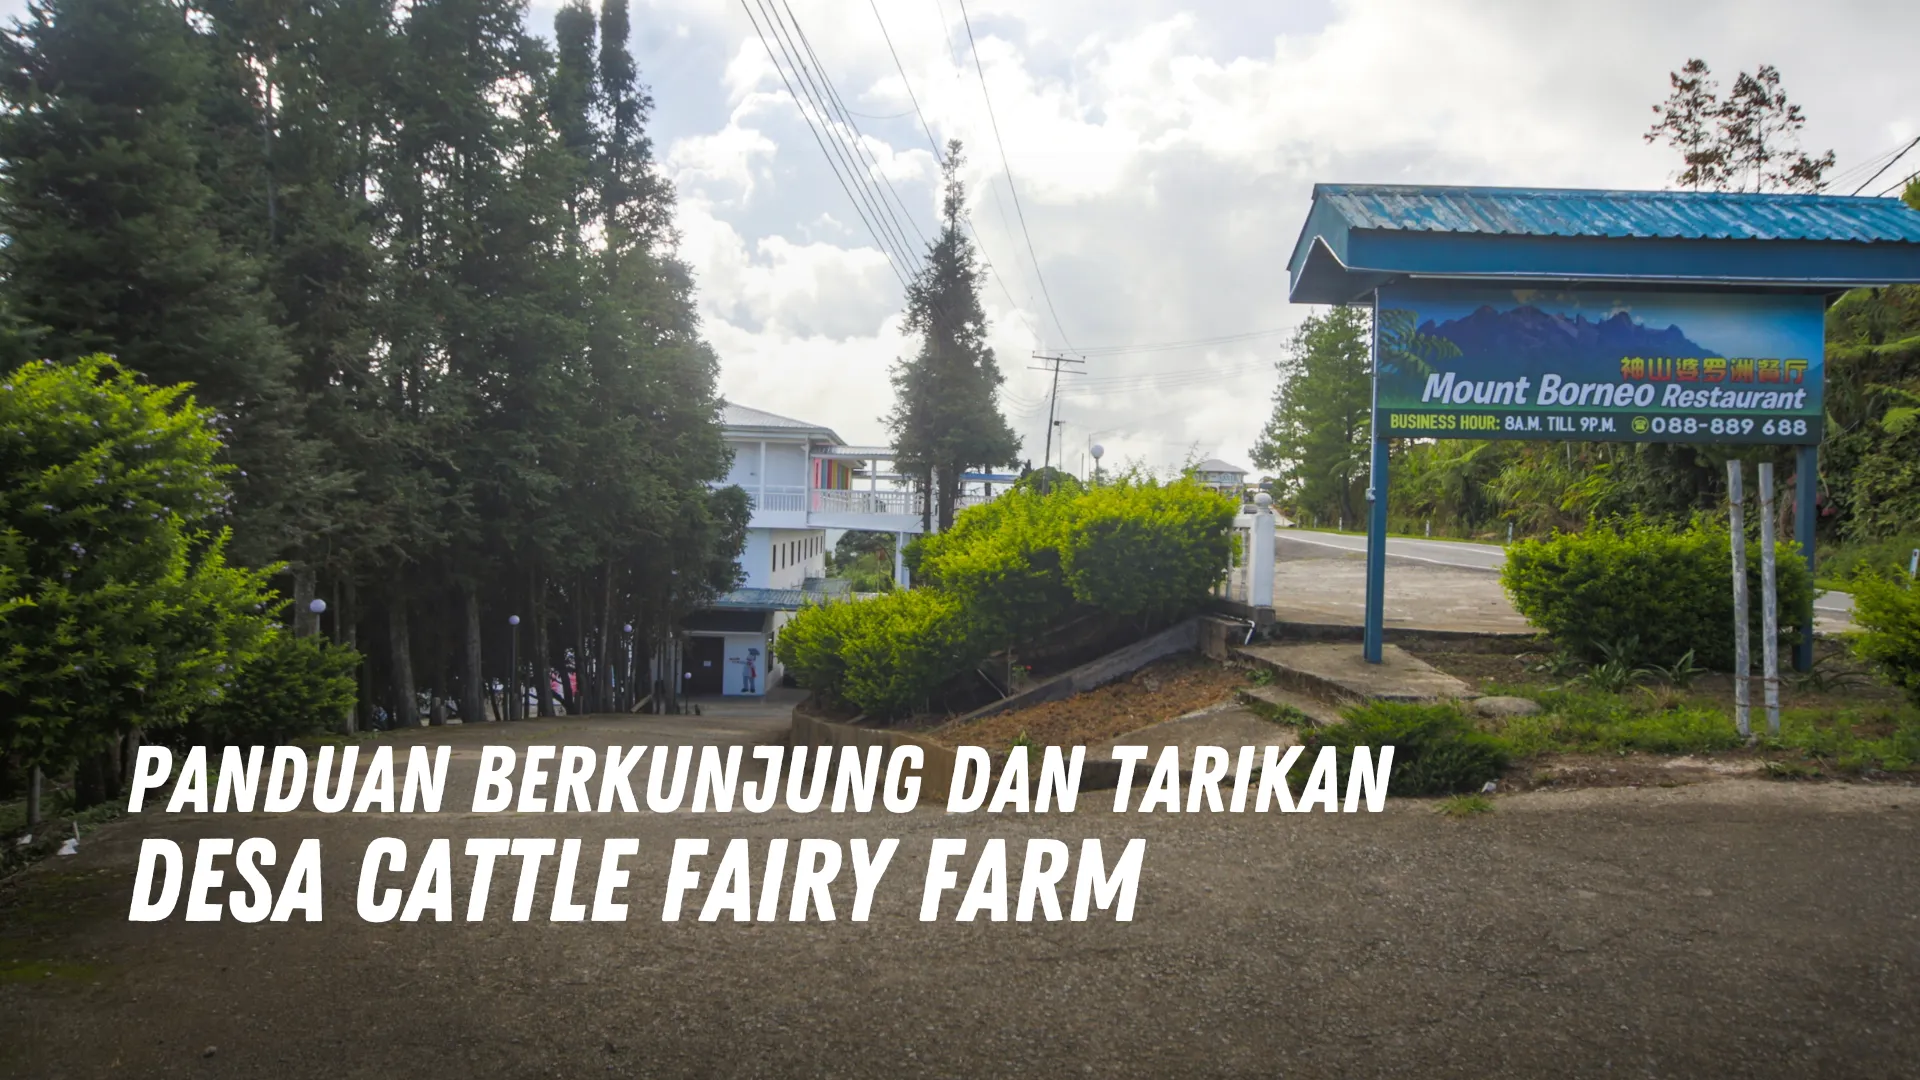 Review Desa Cattle Fairy Farm Malaysia